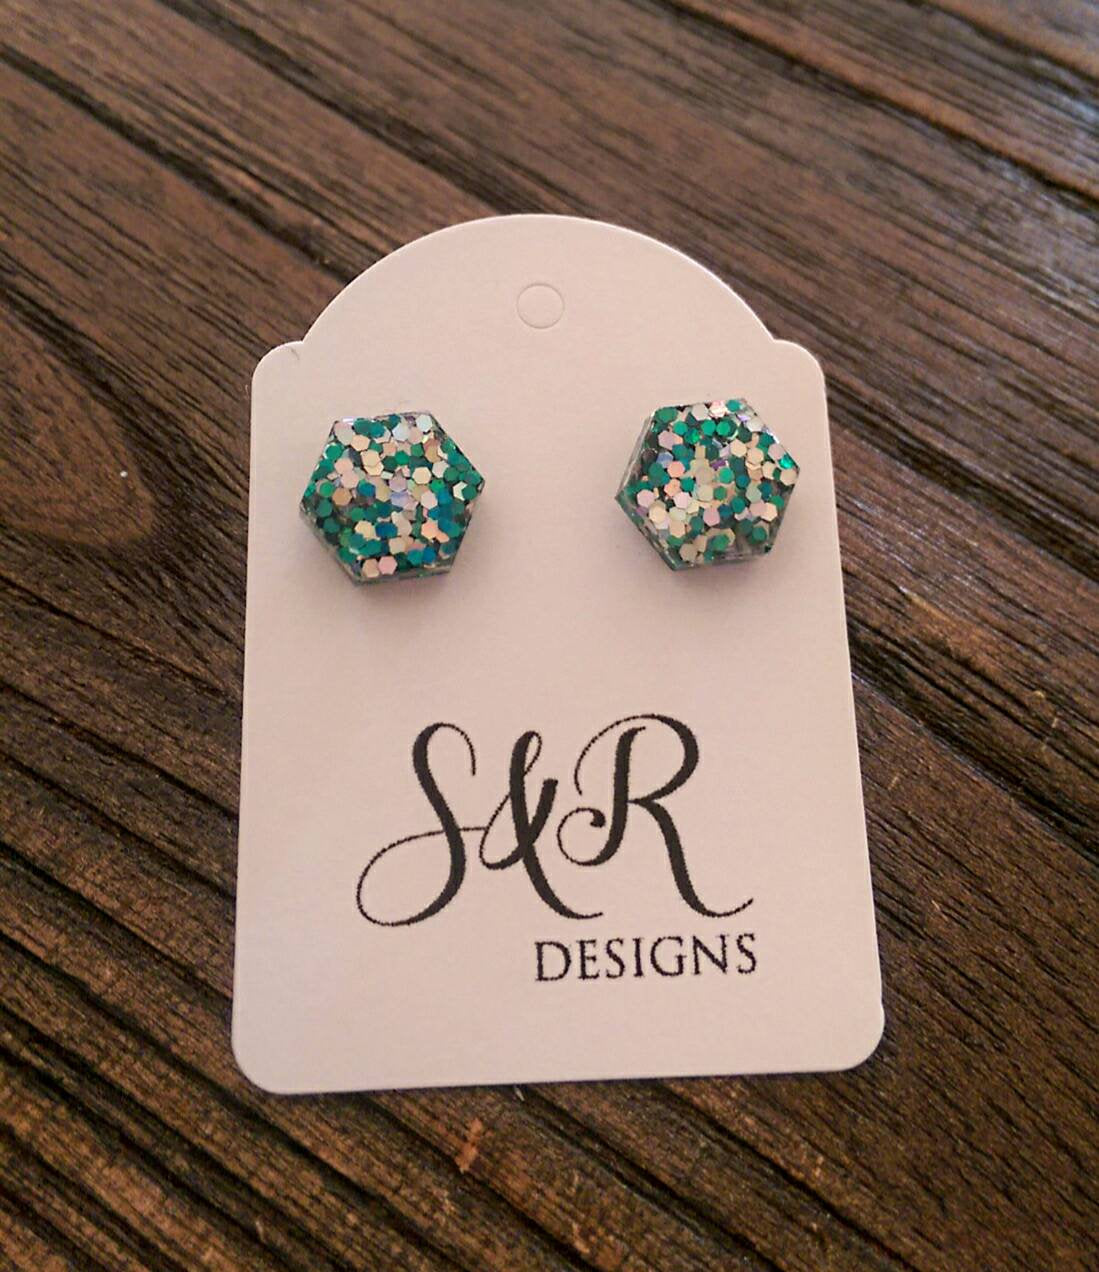 Hexagon Resin Stud Earrings, Holographic Silver and Green Earrings. Stainless Steel Stud Earrings. 10mm or 6mm